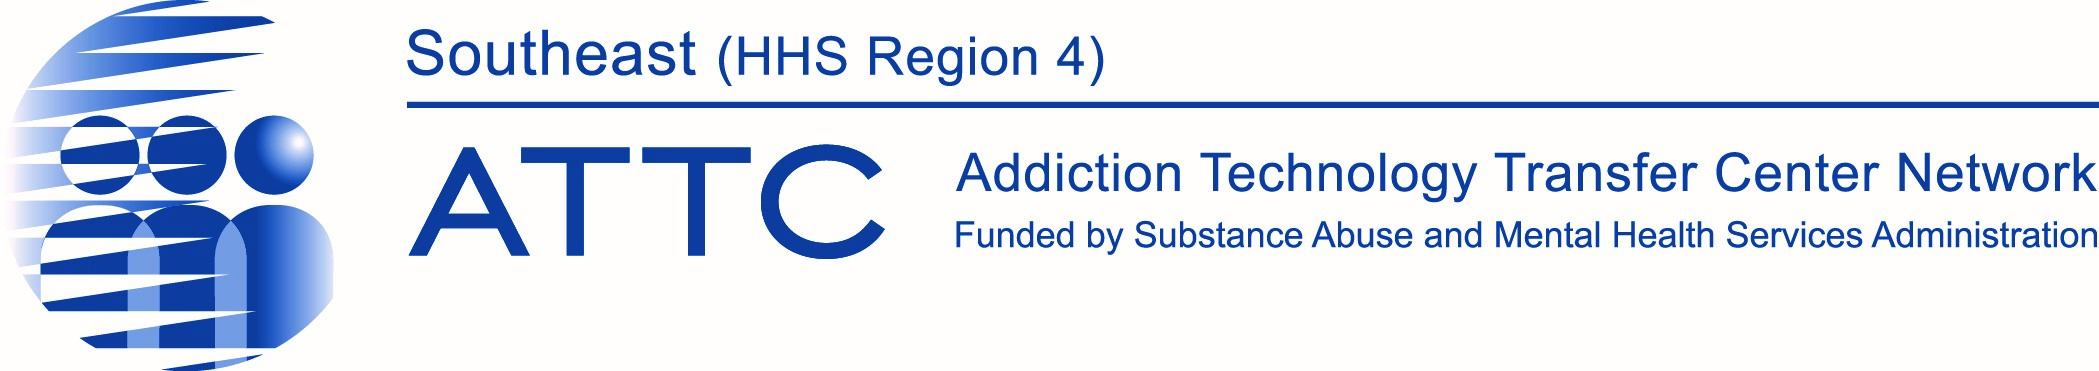 Southeast Addiction Technology Transfer Center logo